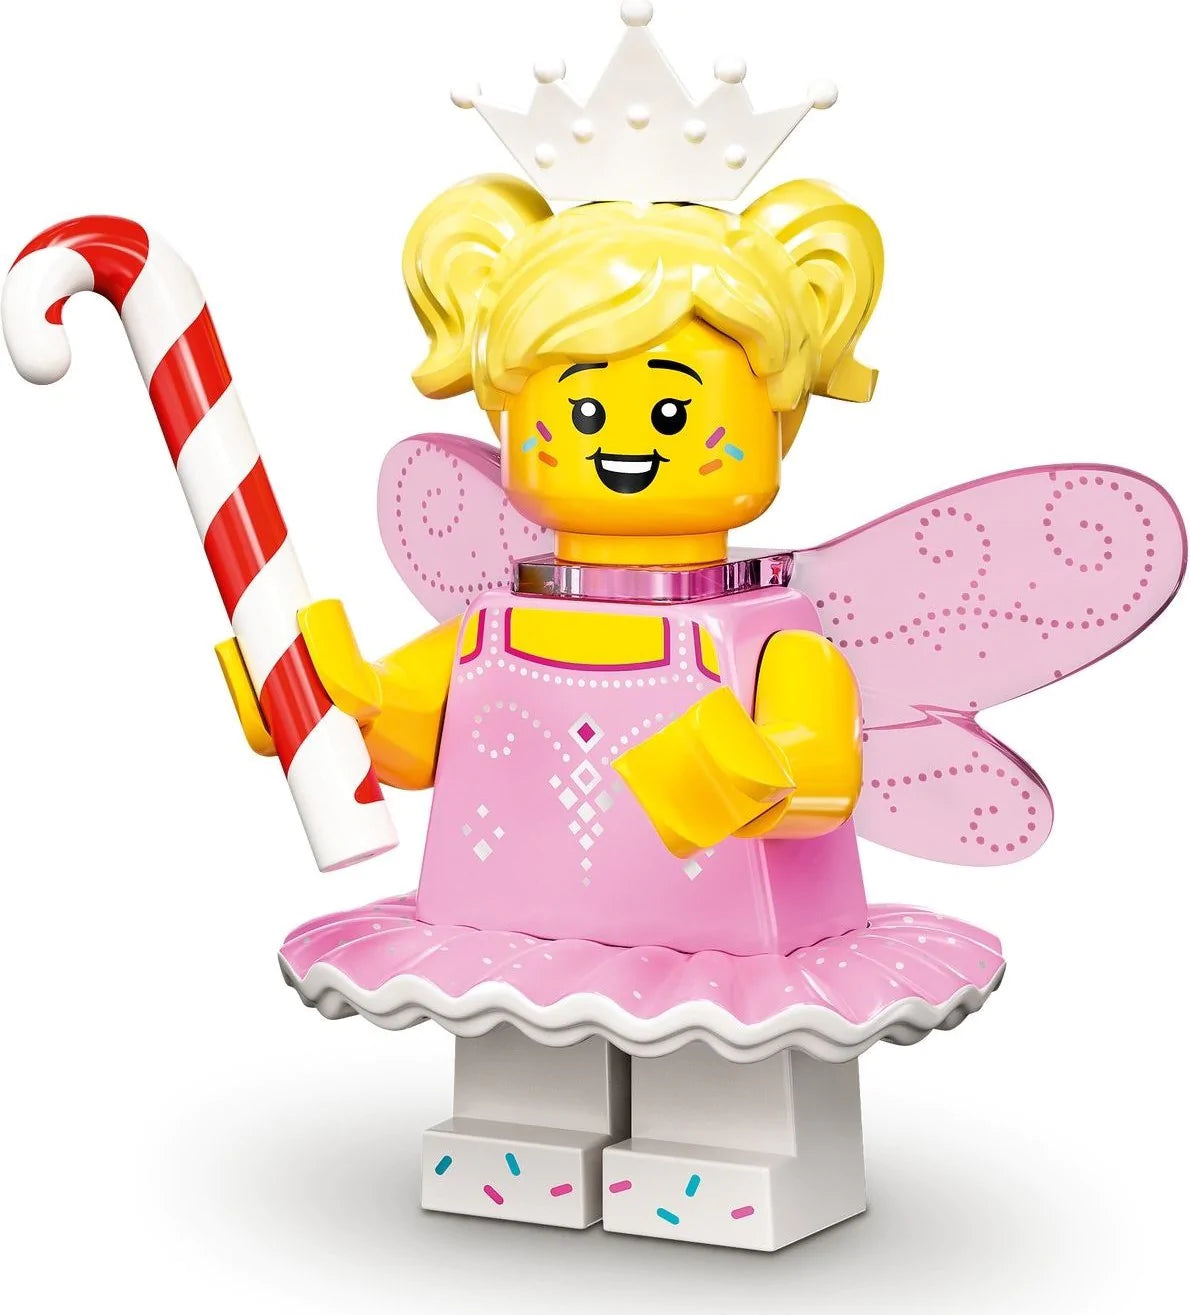 71034 LEGO Minifigures Serie 23 - Personaggi